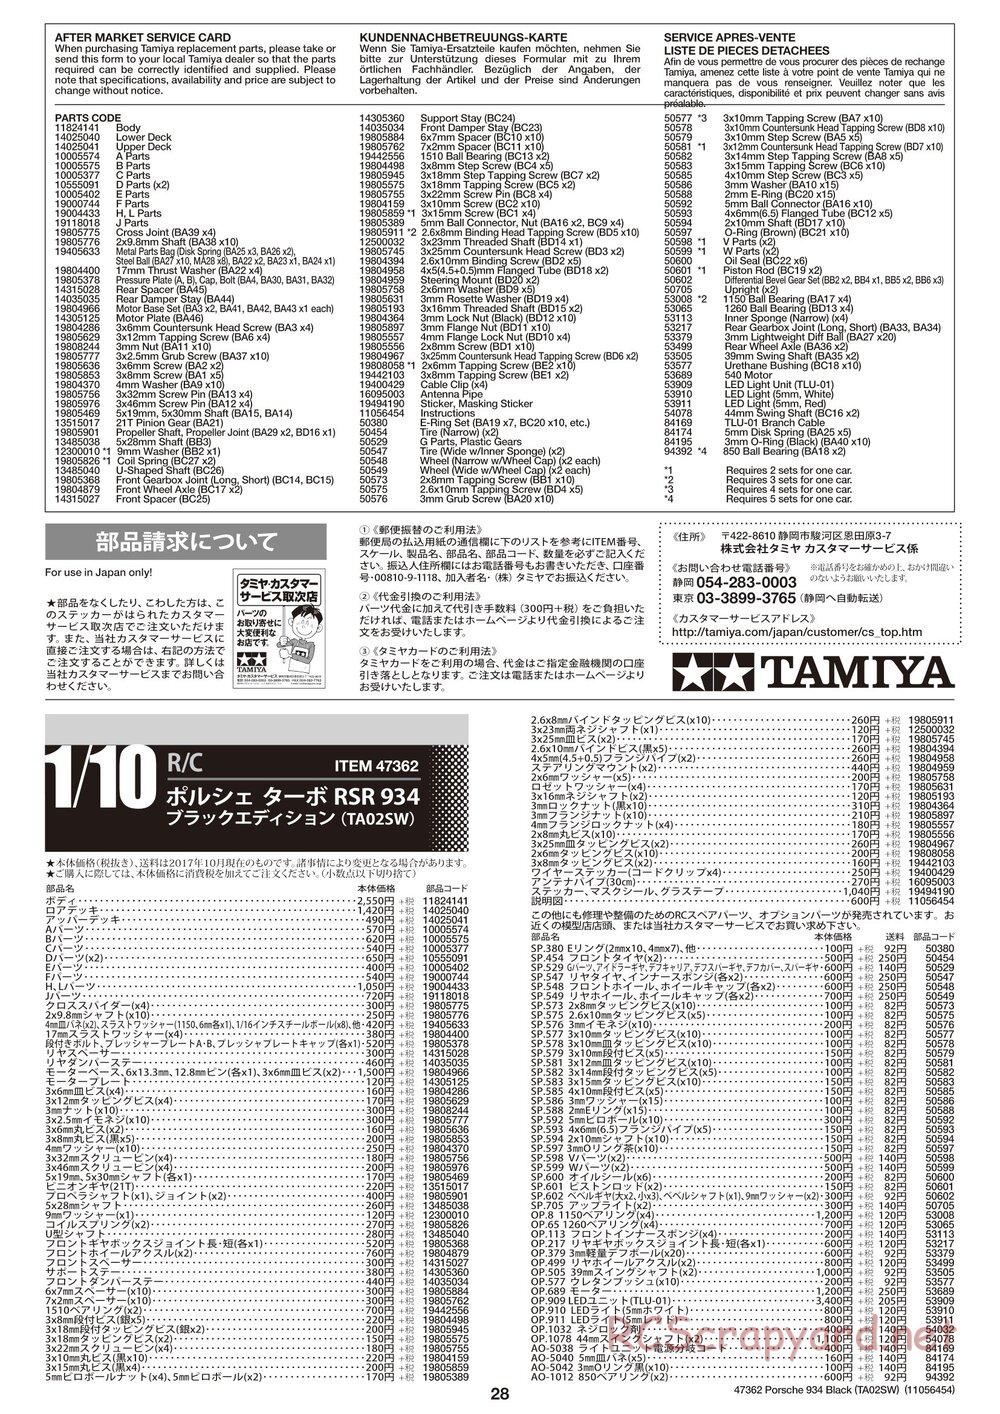 Tamiya - Porsche Turbo RSR Type 934 - Black - TA02SW Chassis - Manual - Page 28